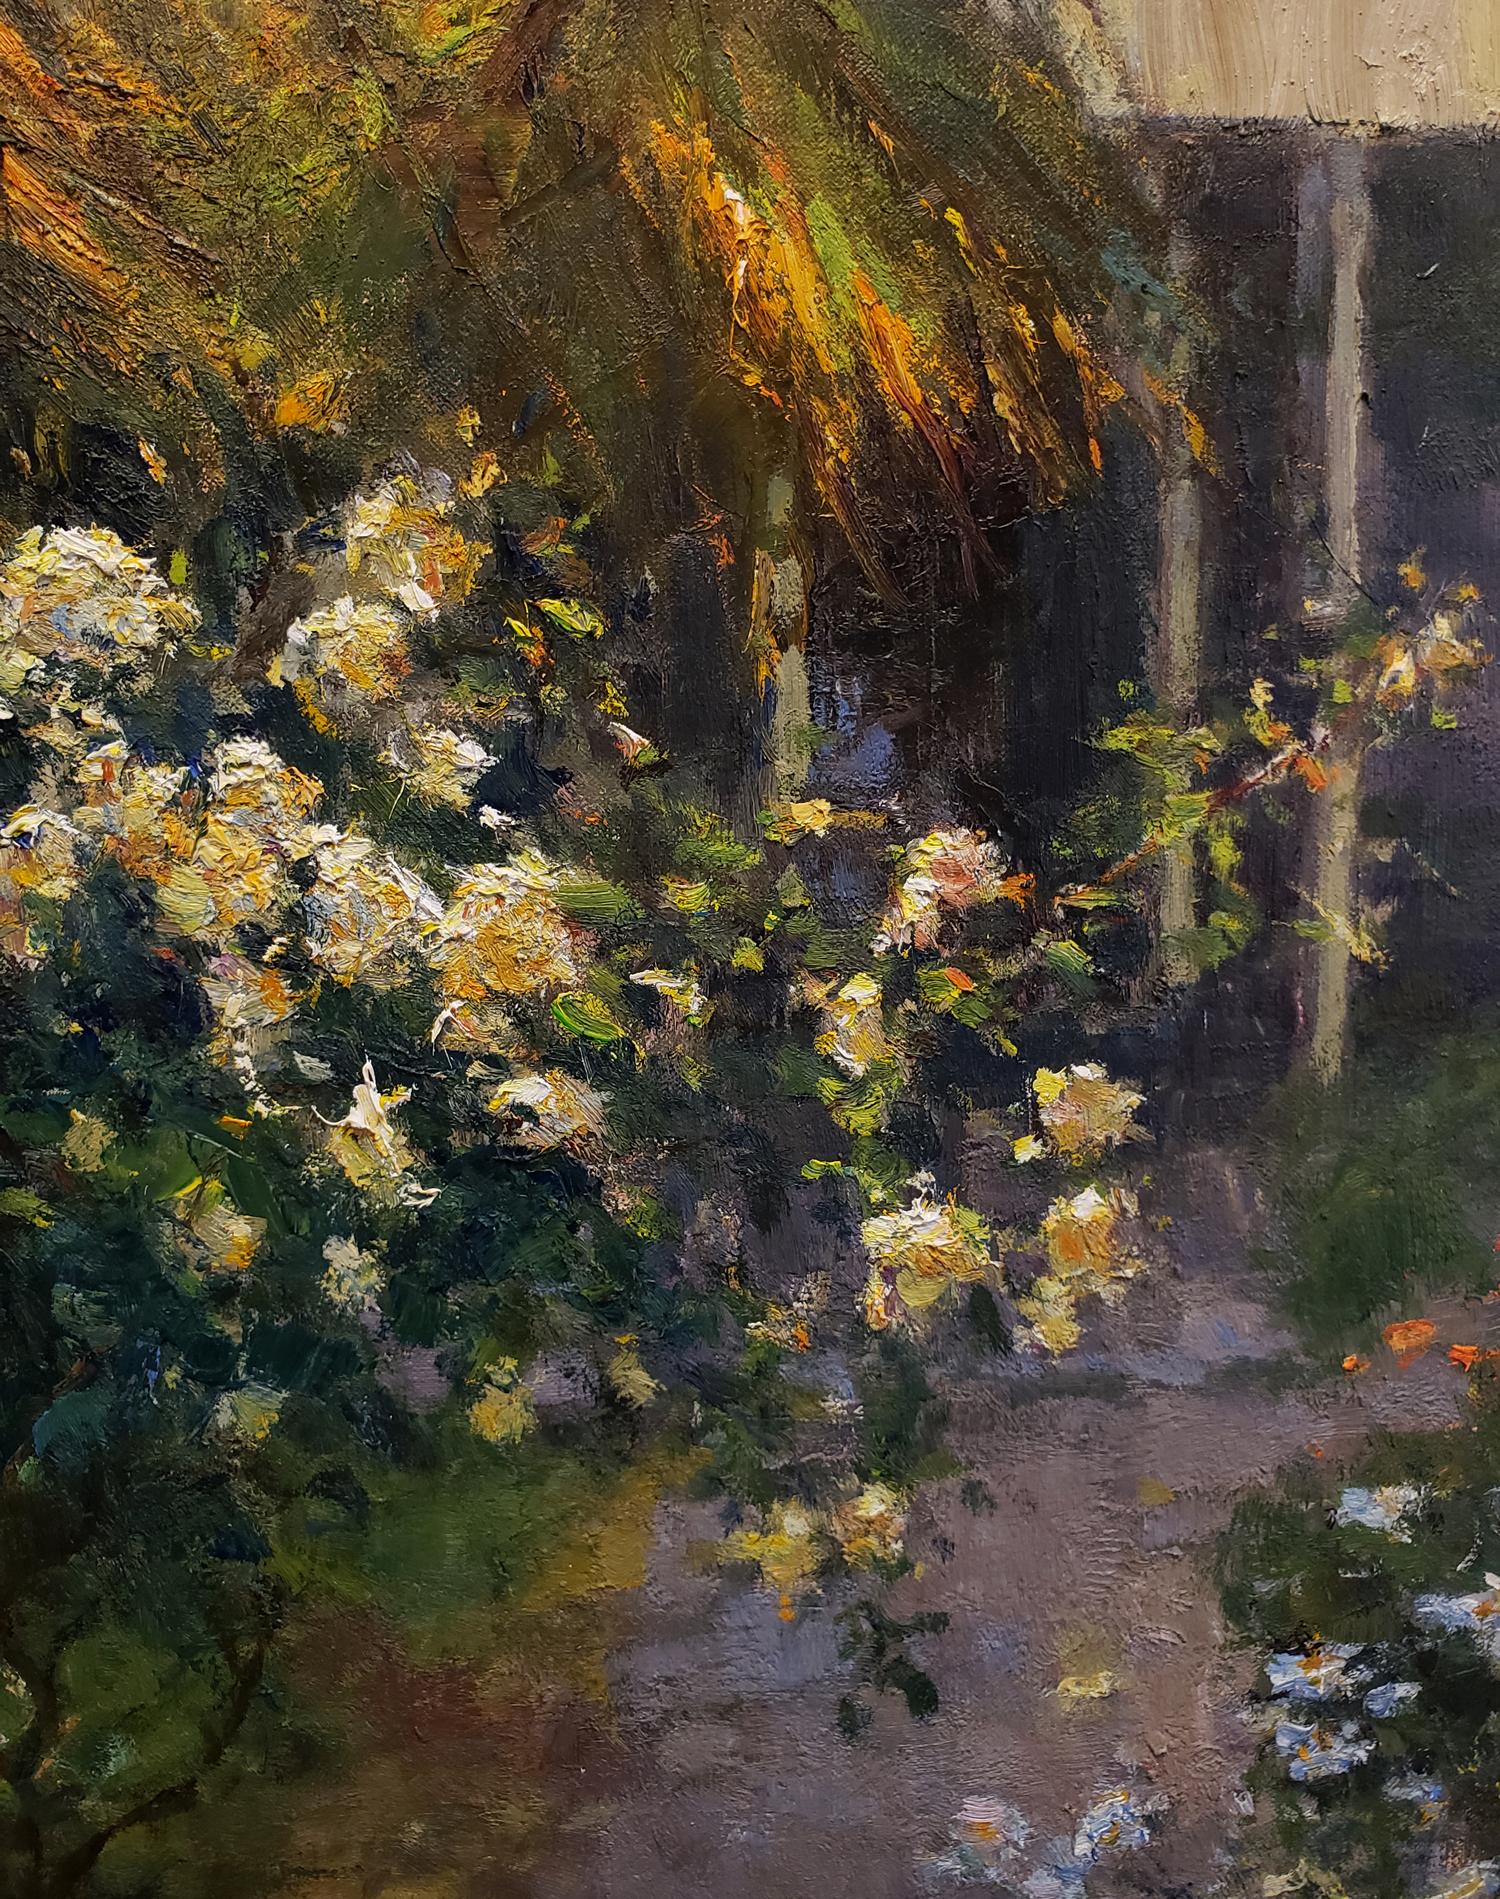 Evening Garden - Impressionist Painting by Jim McVicker